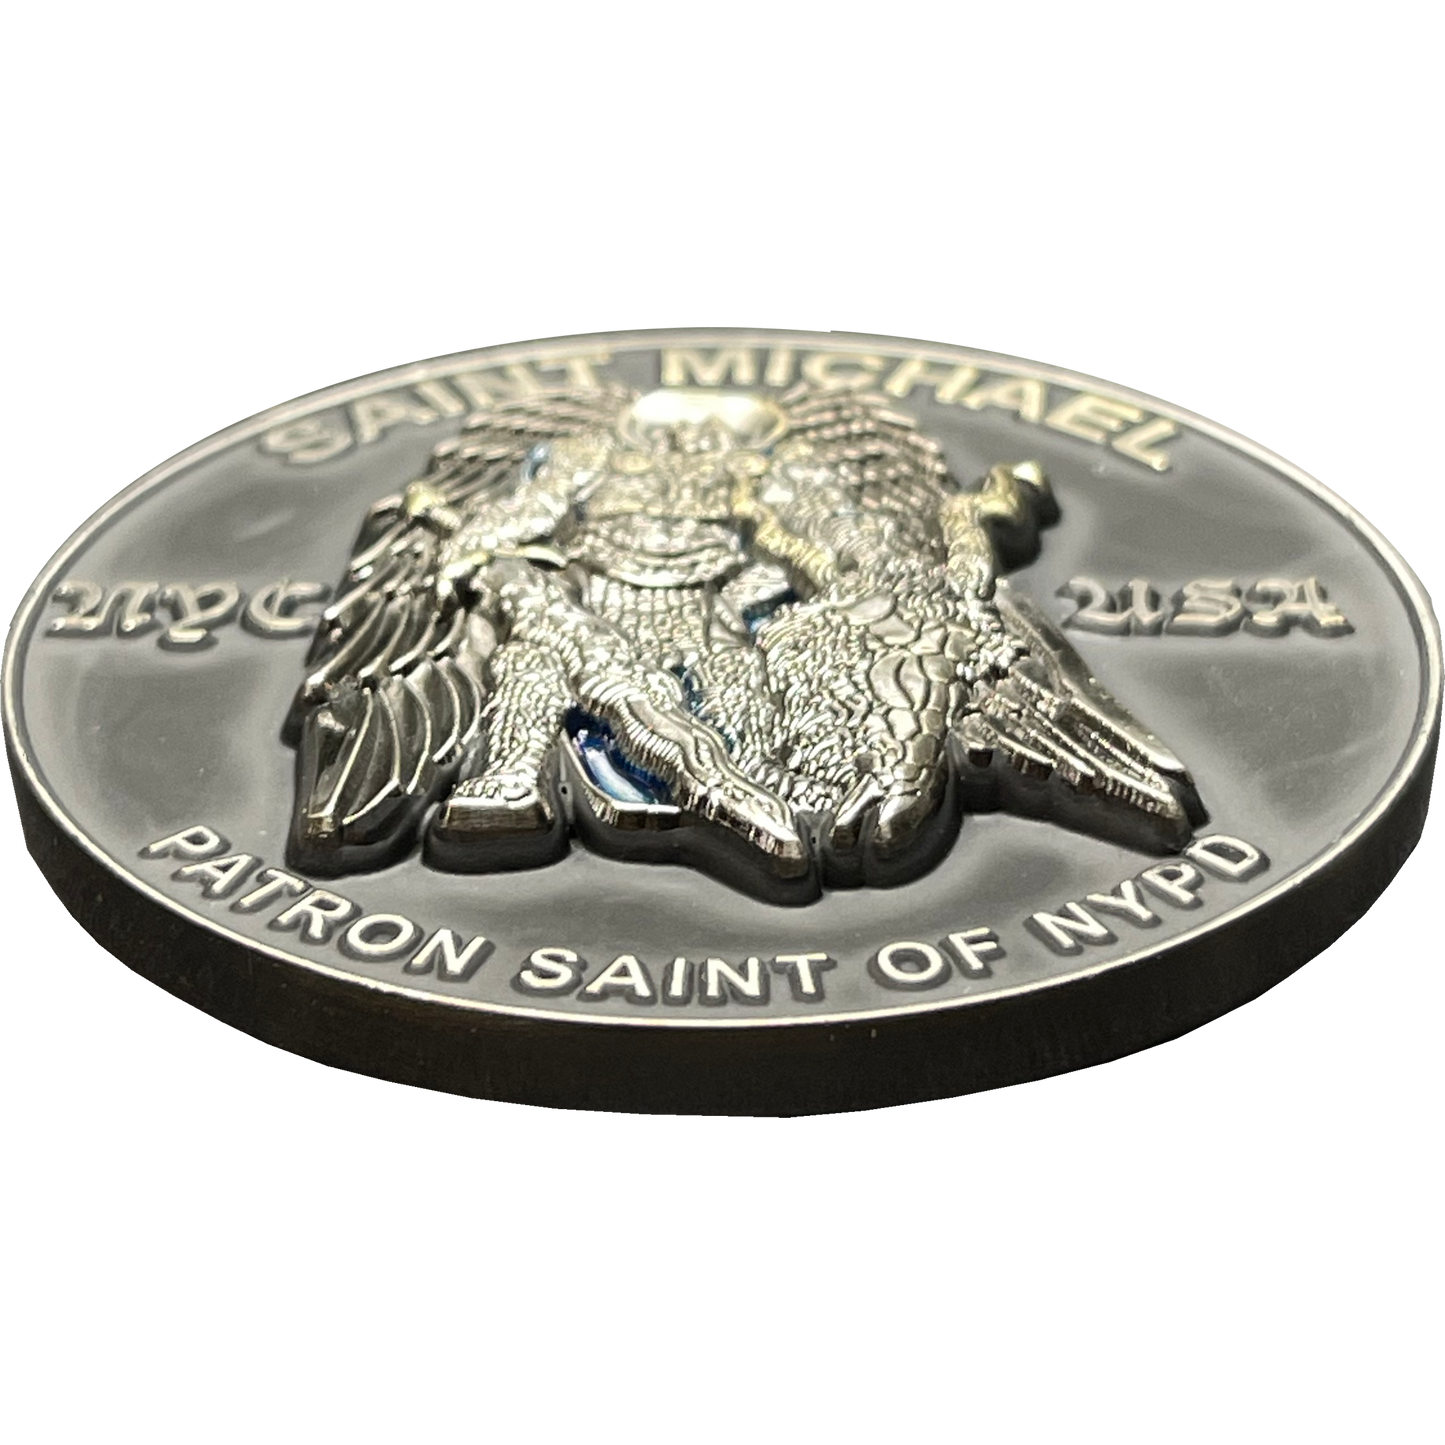 BL15-012 New York City Police Department Officer Saint Michael Patron Saint Challenge Coin ST. MICHAEL